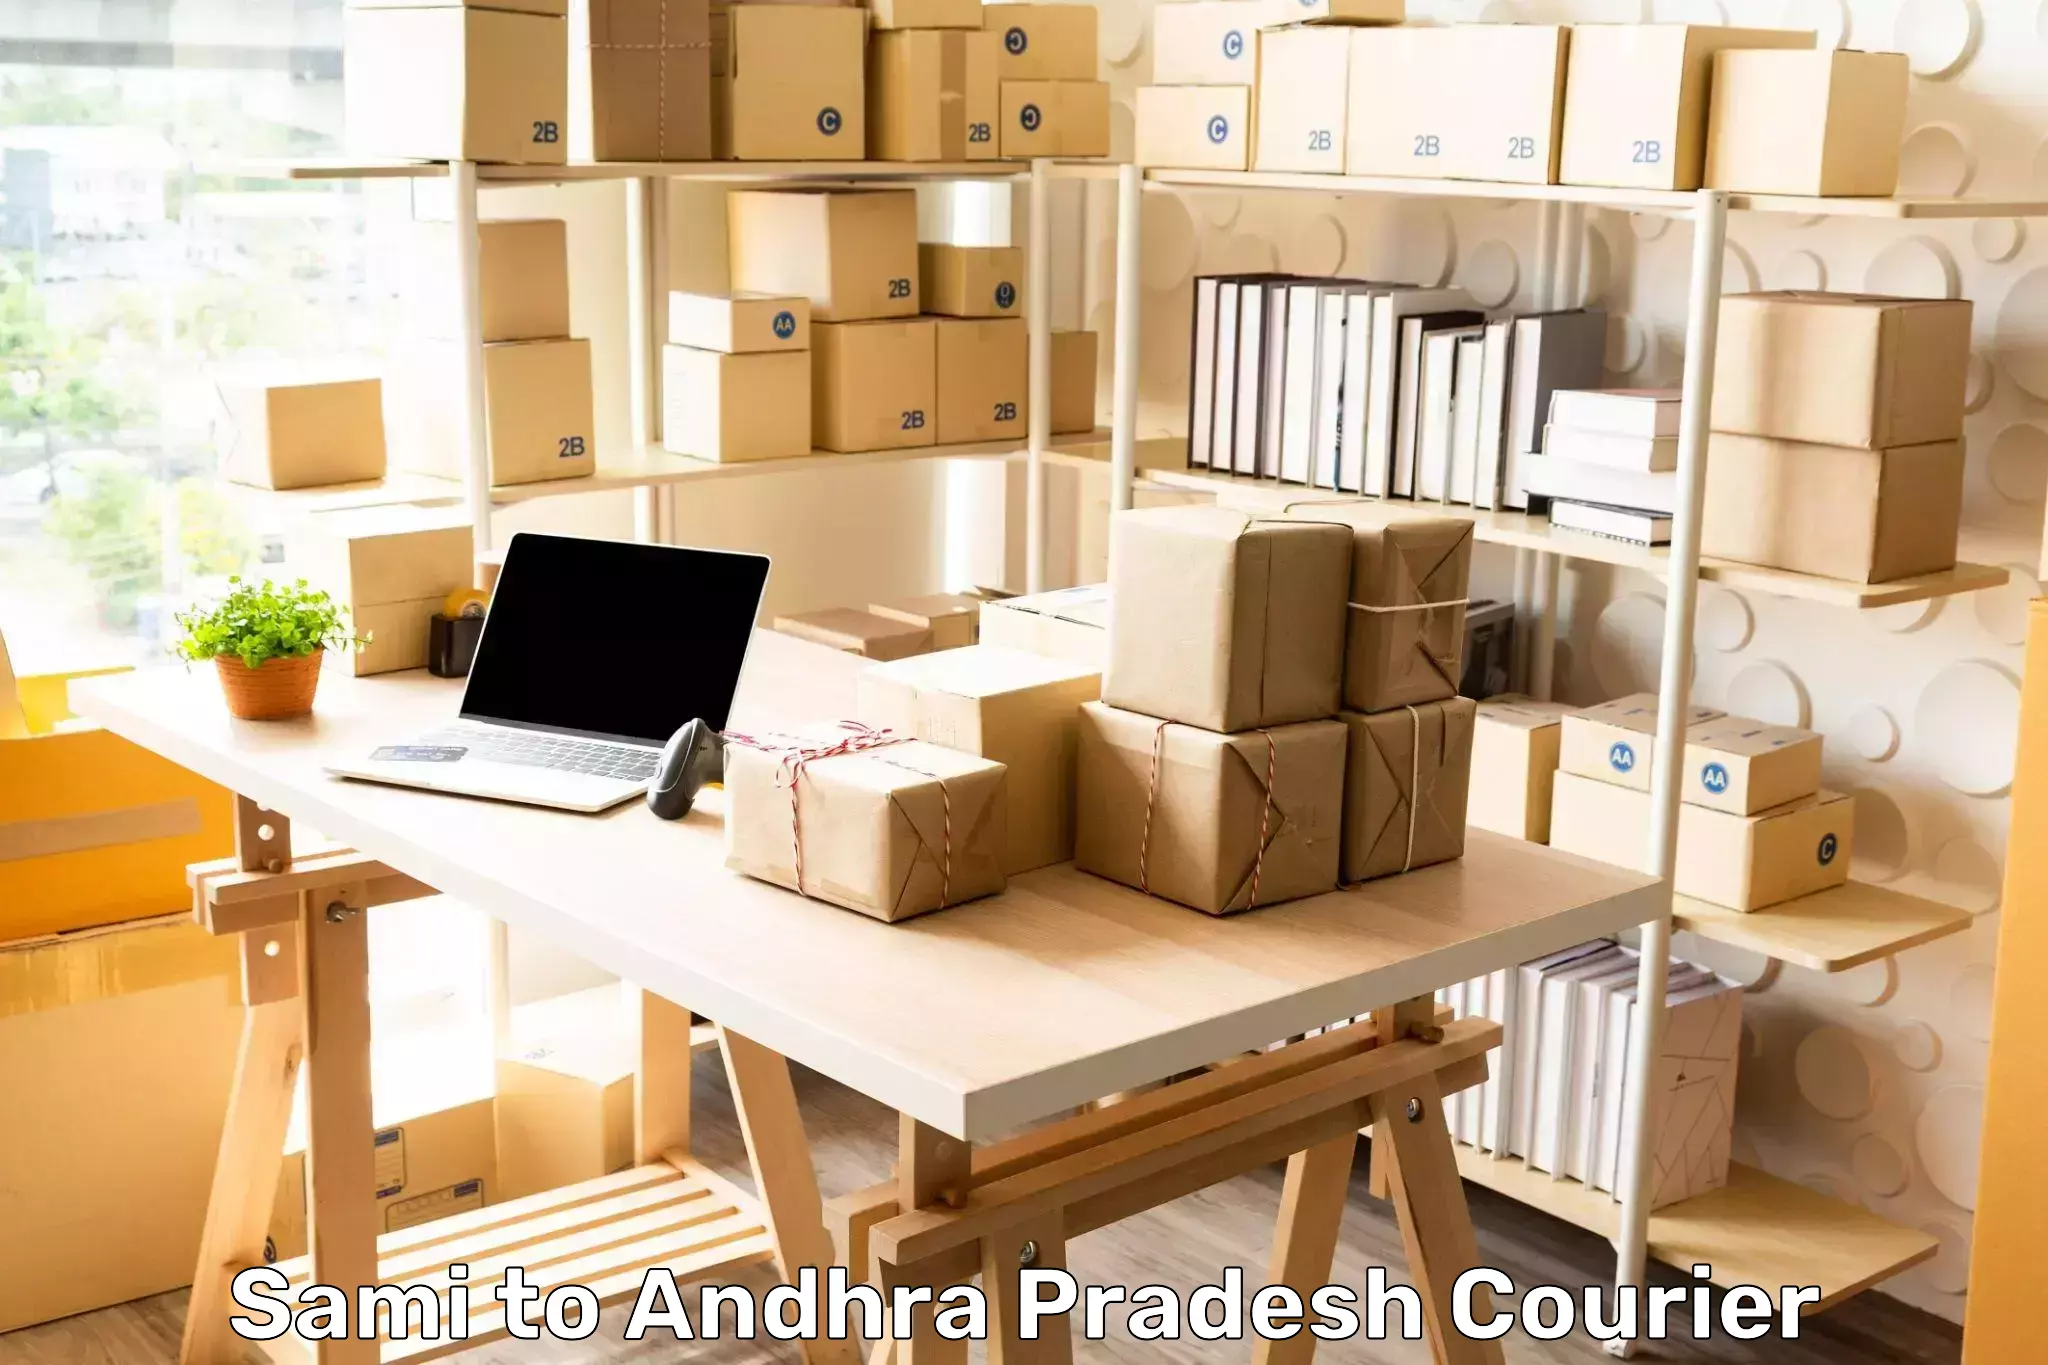 Return courier service in Sami to Andhra Pradesh